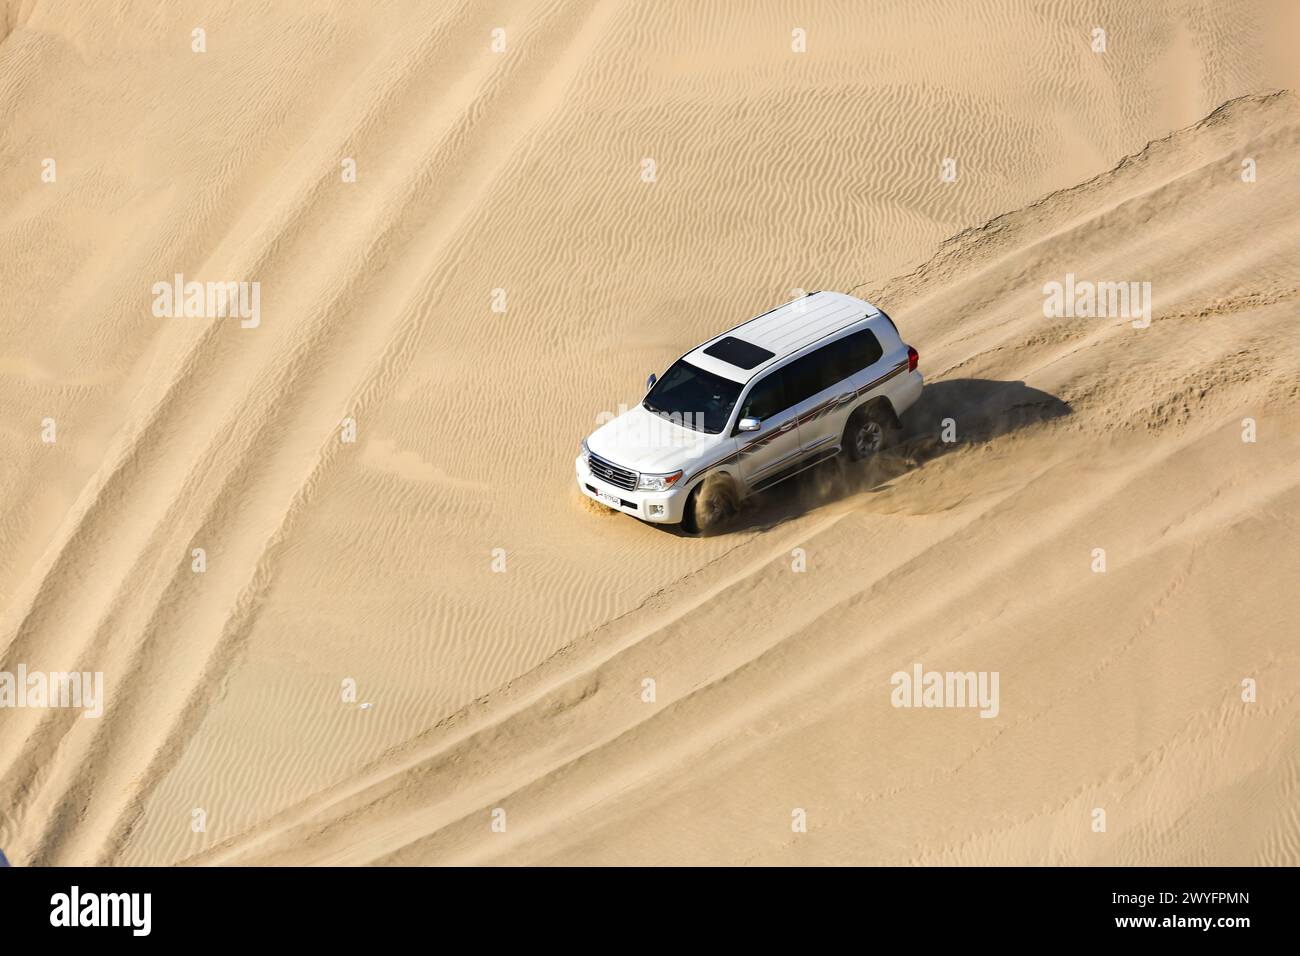 Four wheel drive through the desert in the inland sea, Doha Qatar Stock Photo